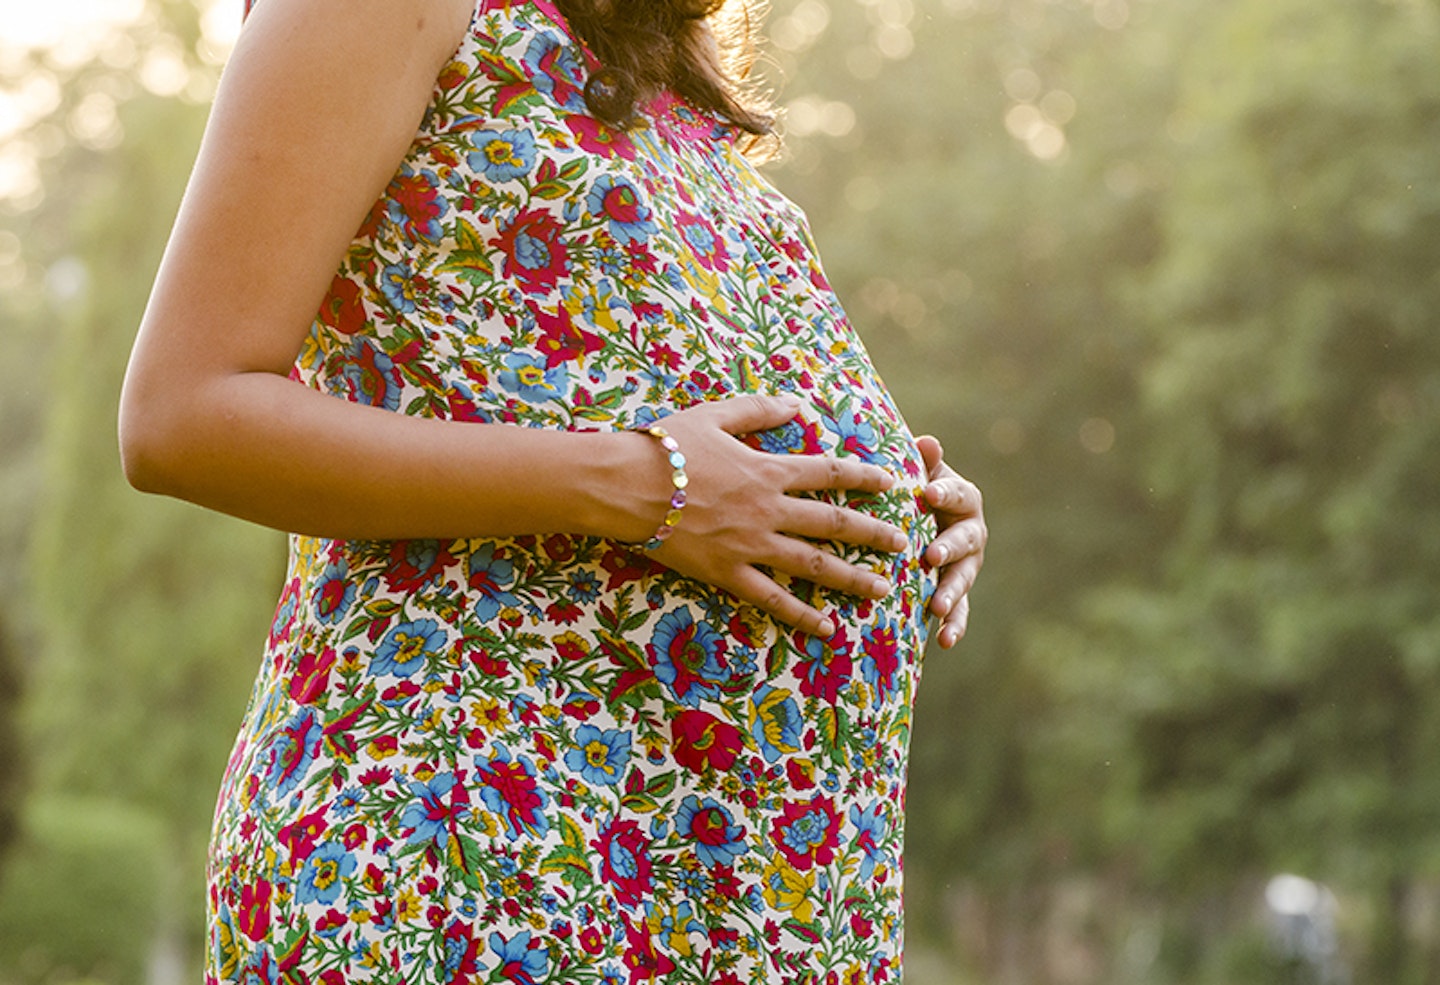 Pregnancy mood swings: your emotional rollercoaster